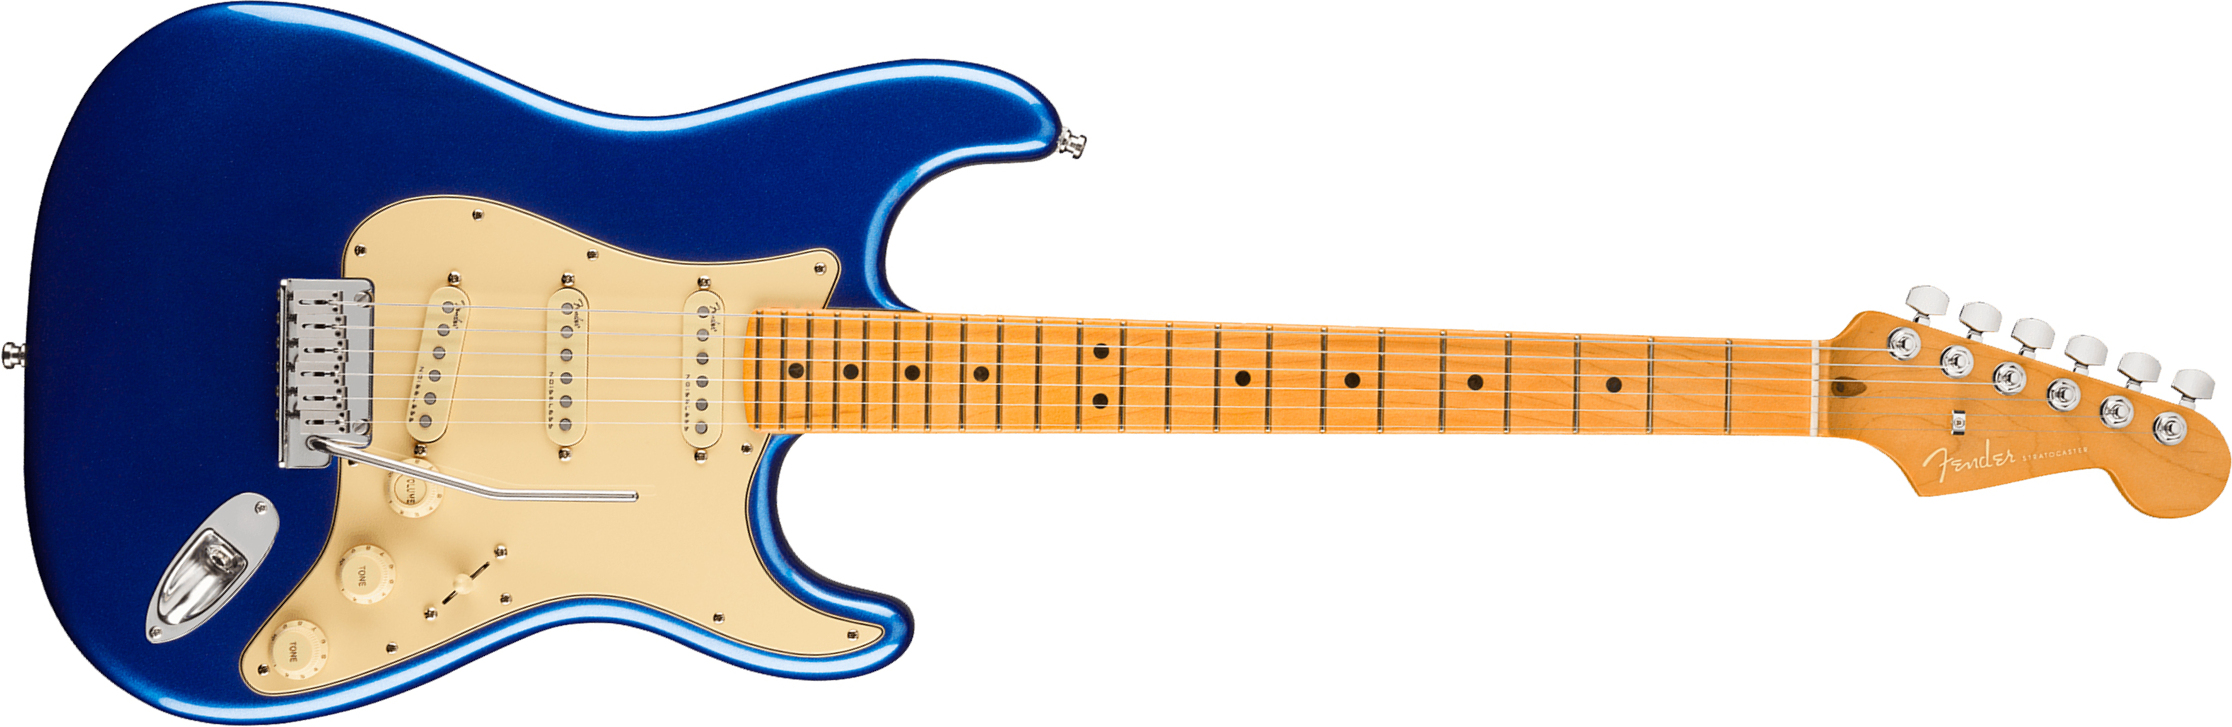 Fender Strat American Ultra 2019 Usa Mn - Cobra Blue - Str shape electric guitar - Main picture